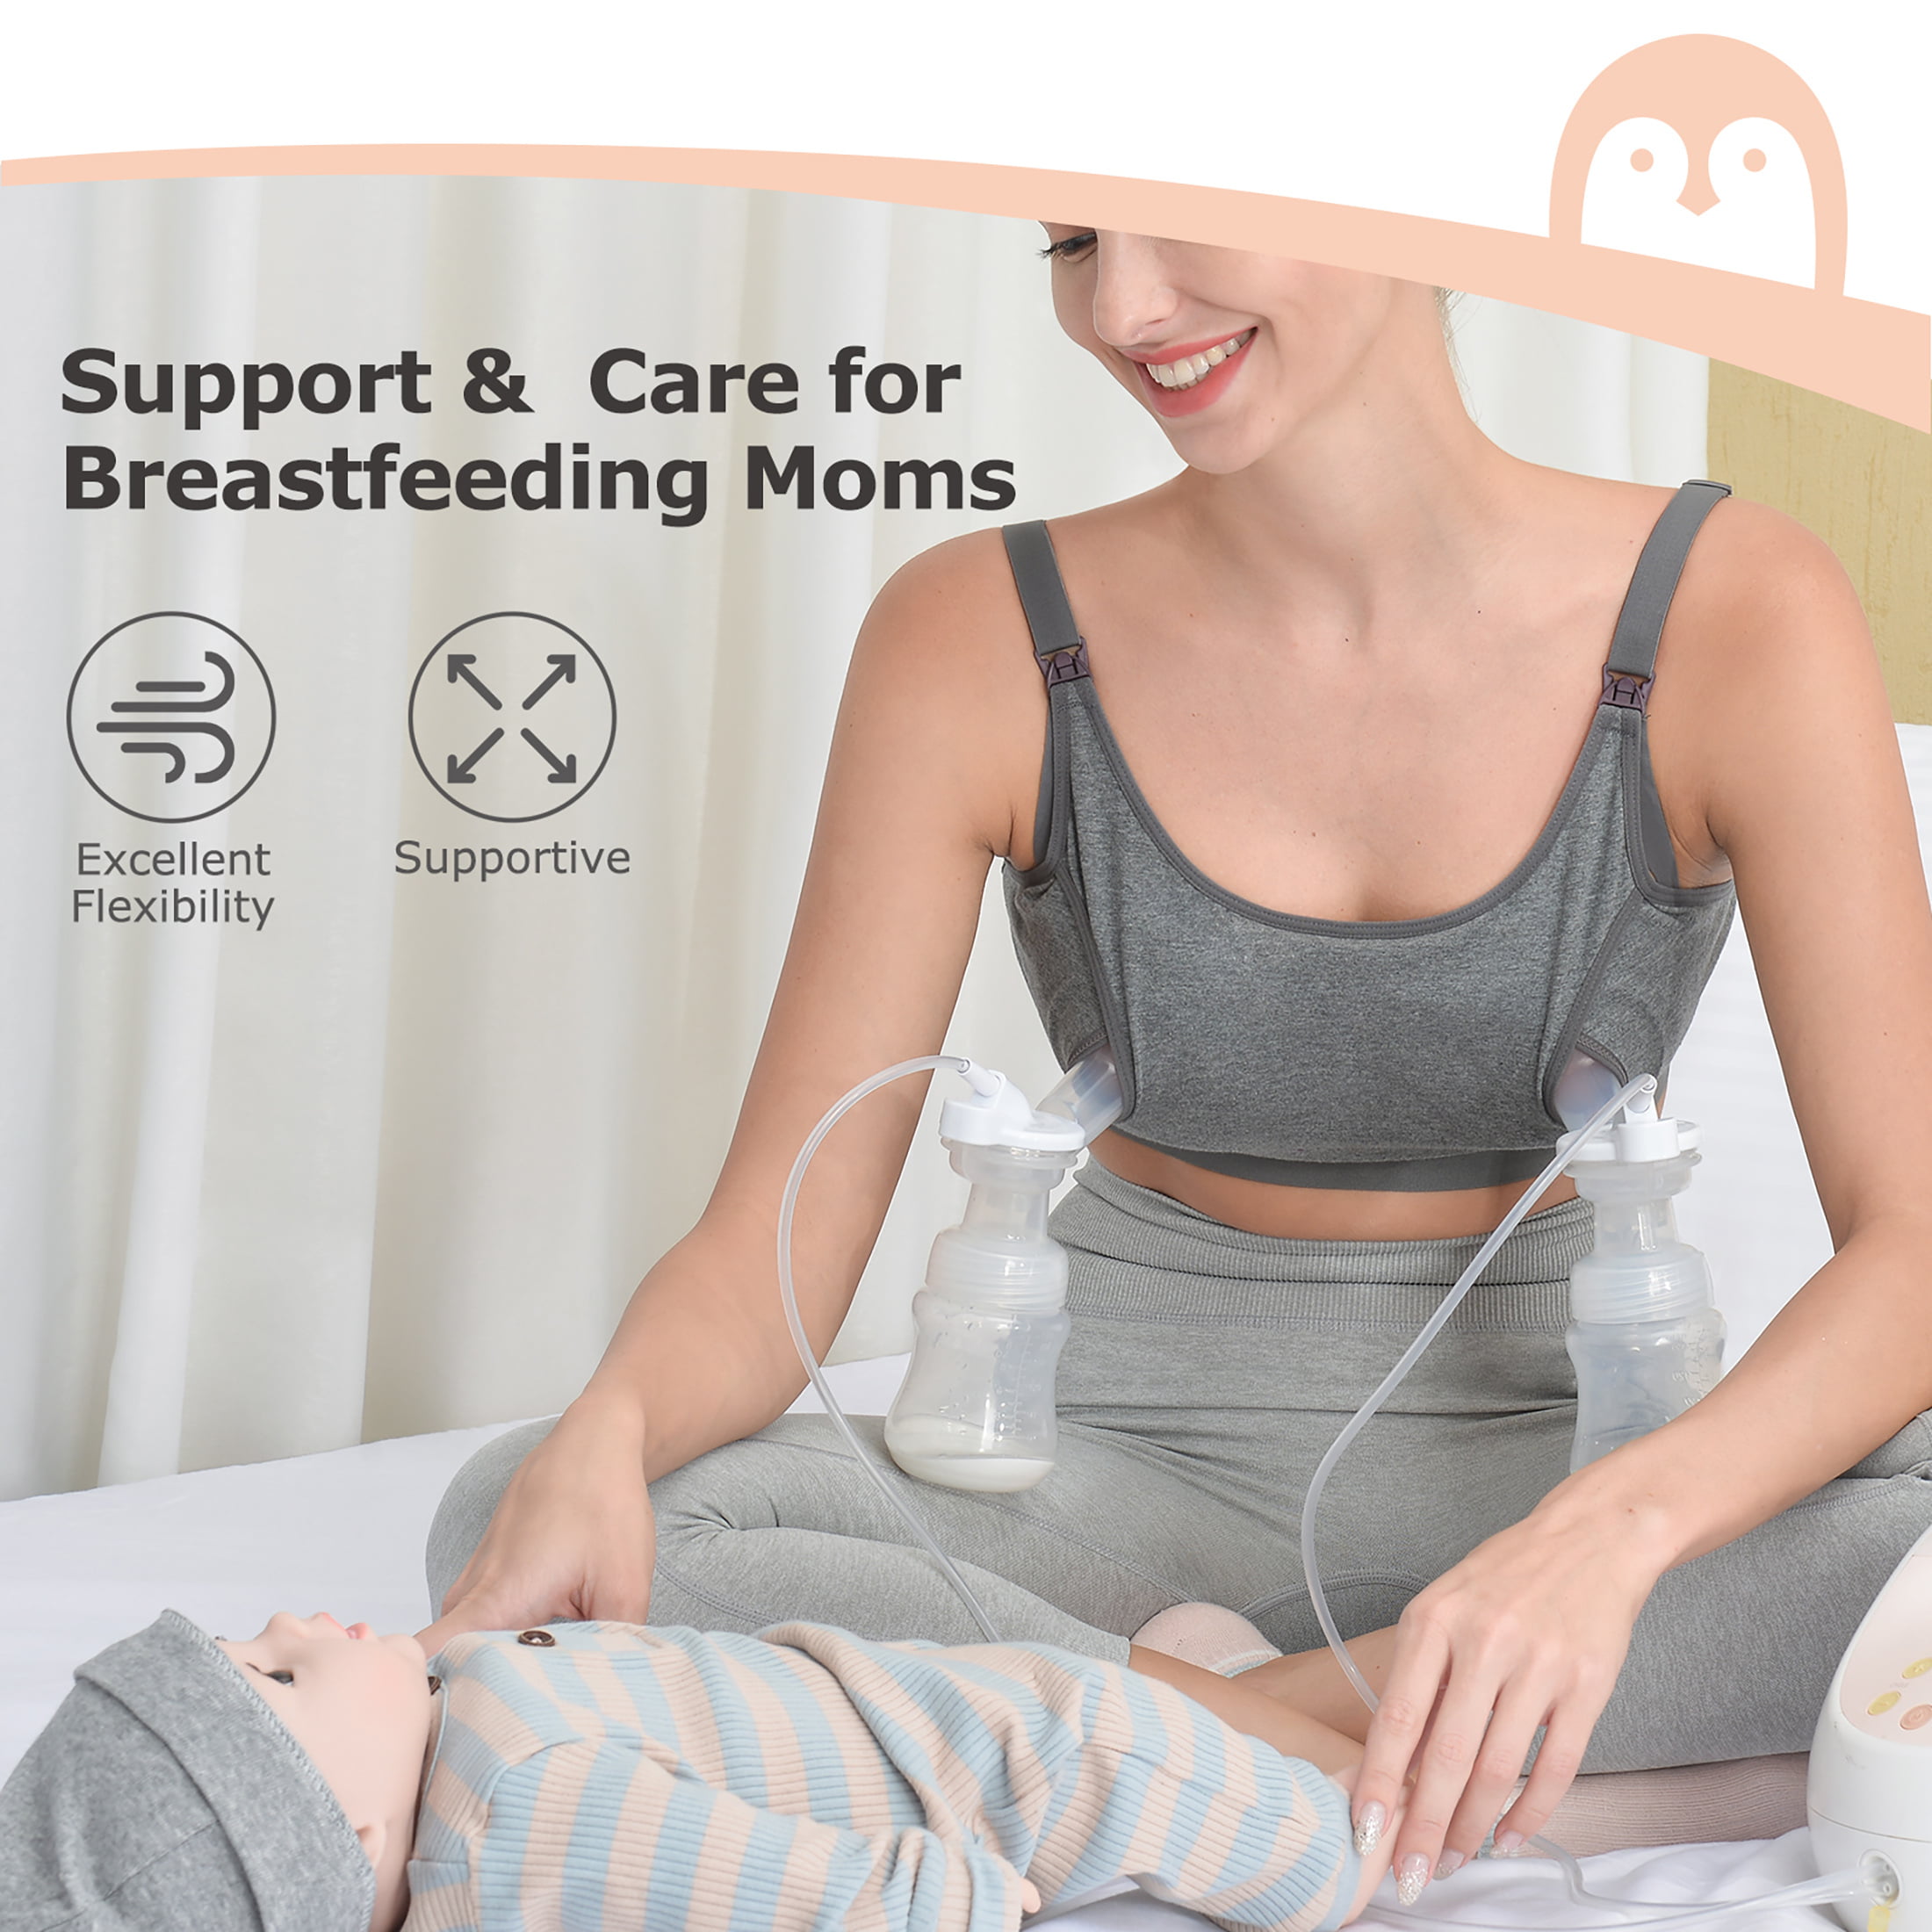 Momcozy 4-in-1 Pumping Bra Hands Free, Fixed Padding Nursing Bra &  Maternity Bra, YN12 Wearable Breast Pump Bra Cotton-Nylon Comfort & Support  for M5